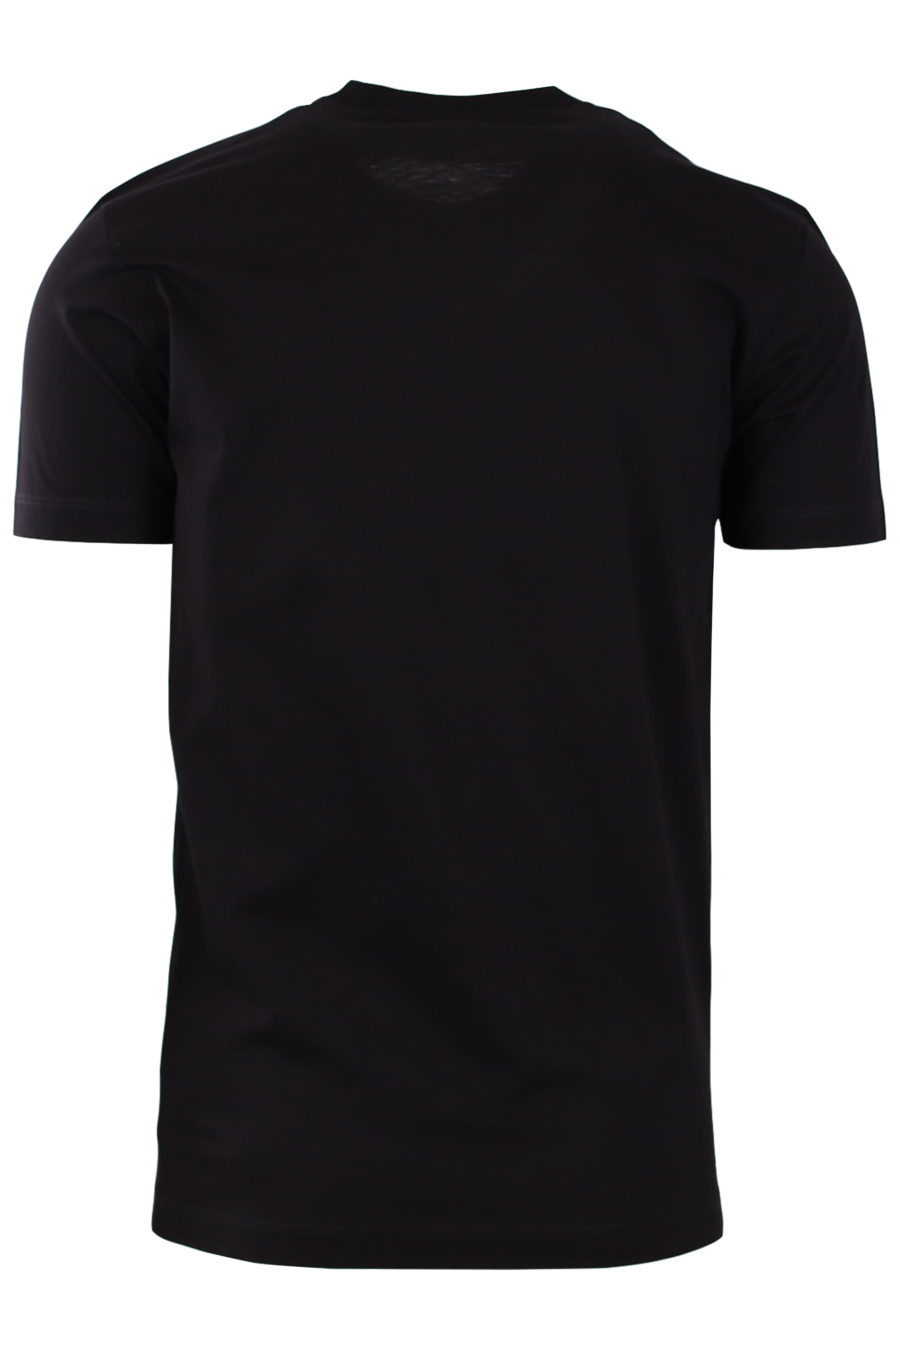 Camiseta negra con estampado engomado hoja - 77b2c0daf1123b76c9a72cc7fba8cd60fcbd3a91